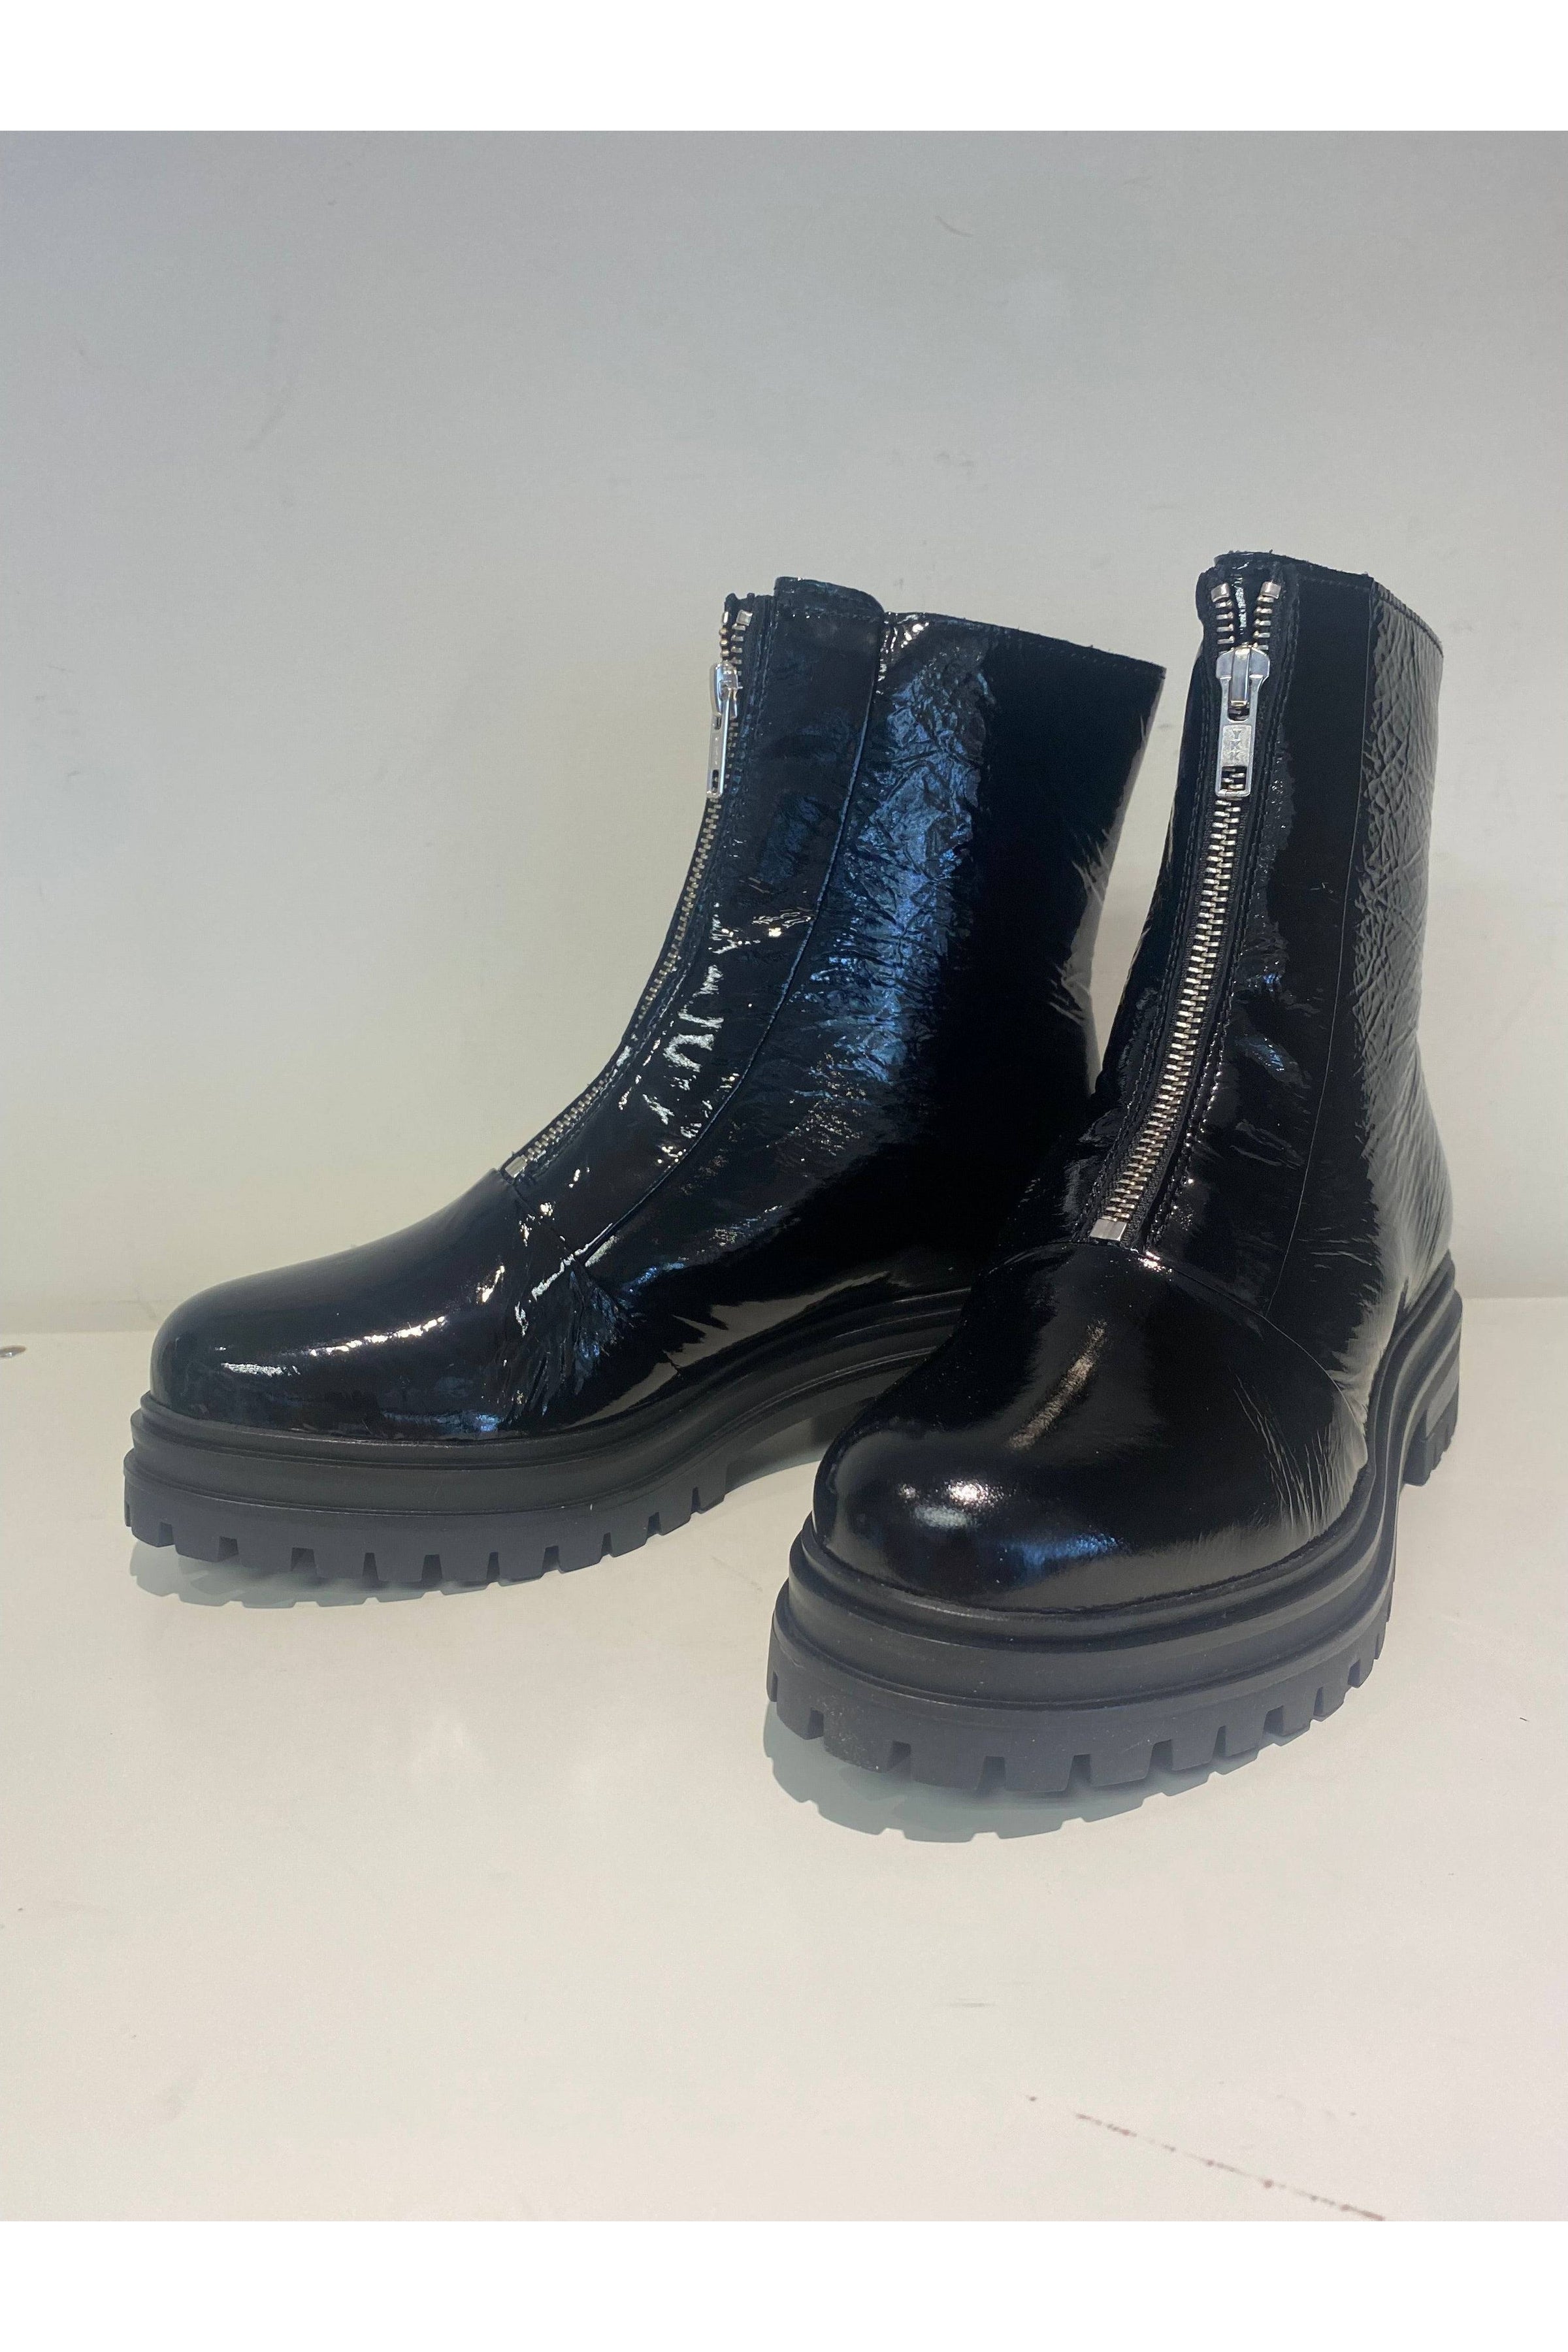 Miz Mooz Patent Ankle Boot - Style Lyle, pair1